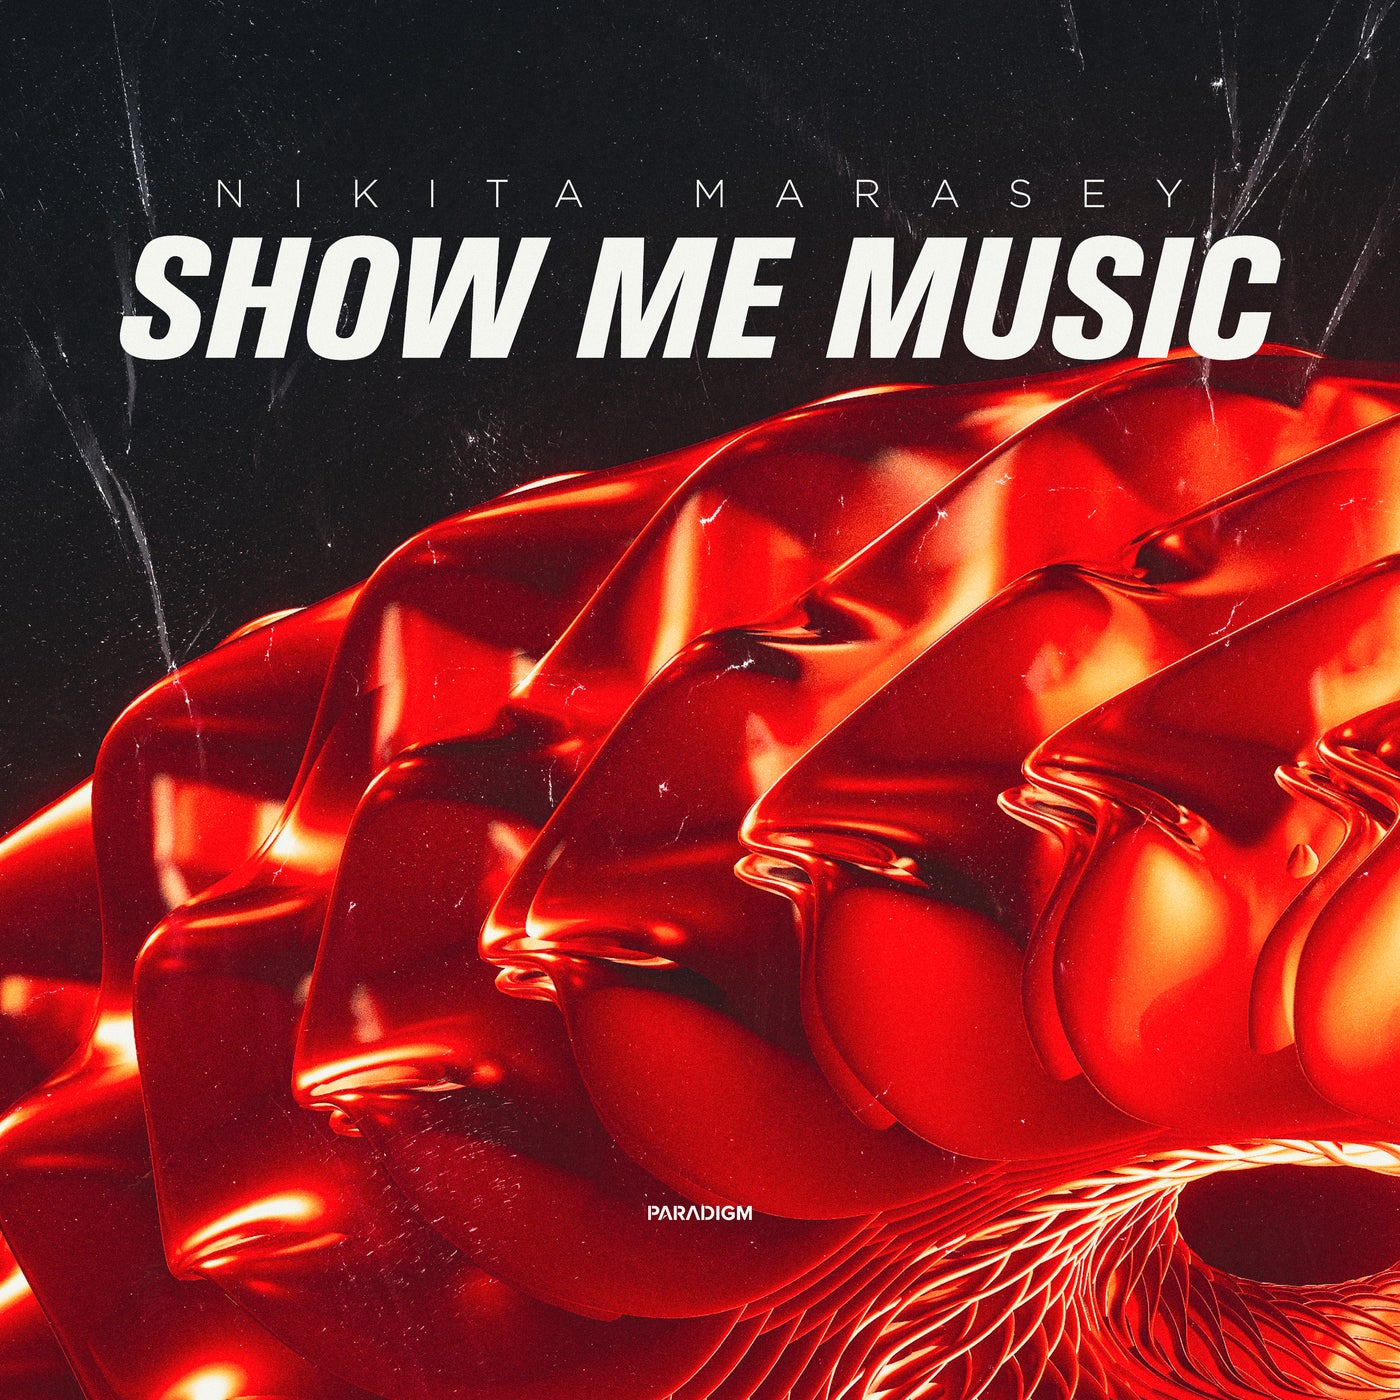 Show Me Music